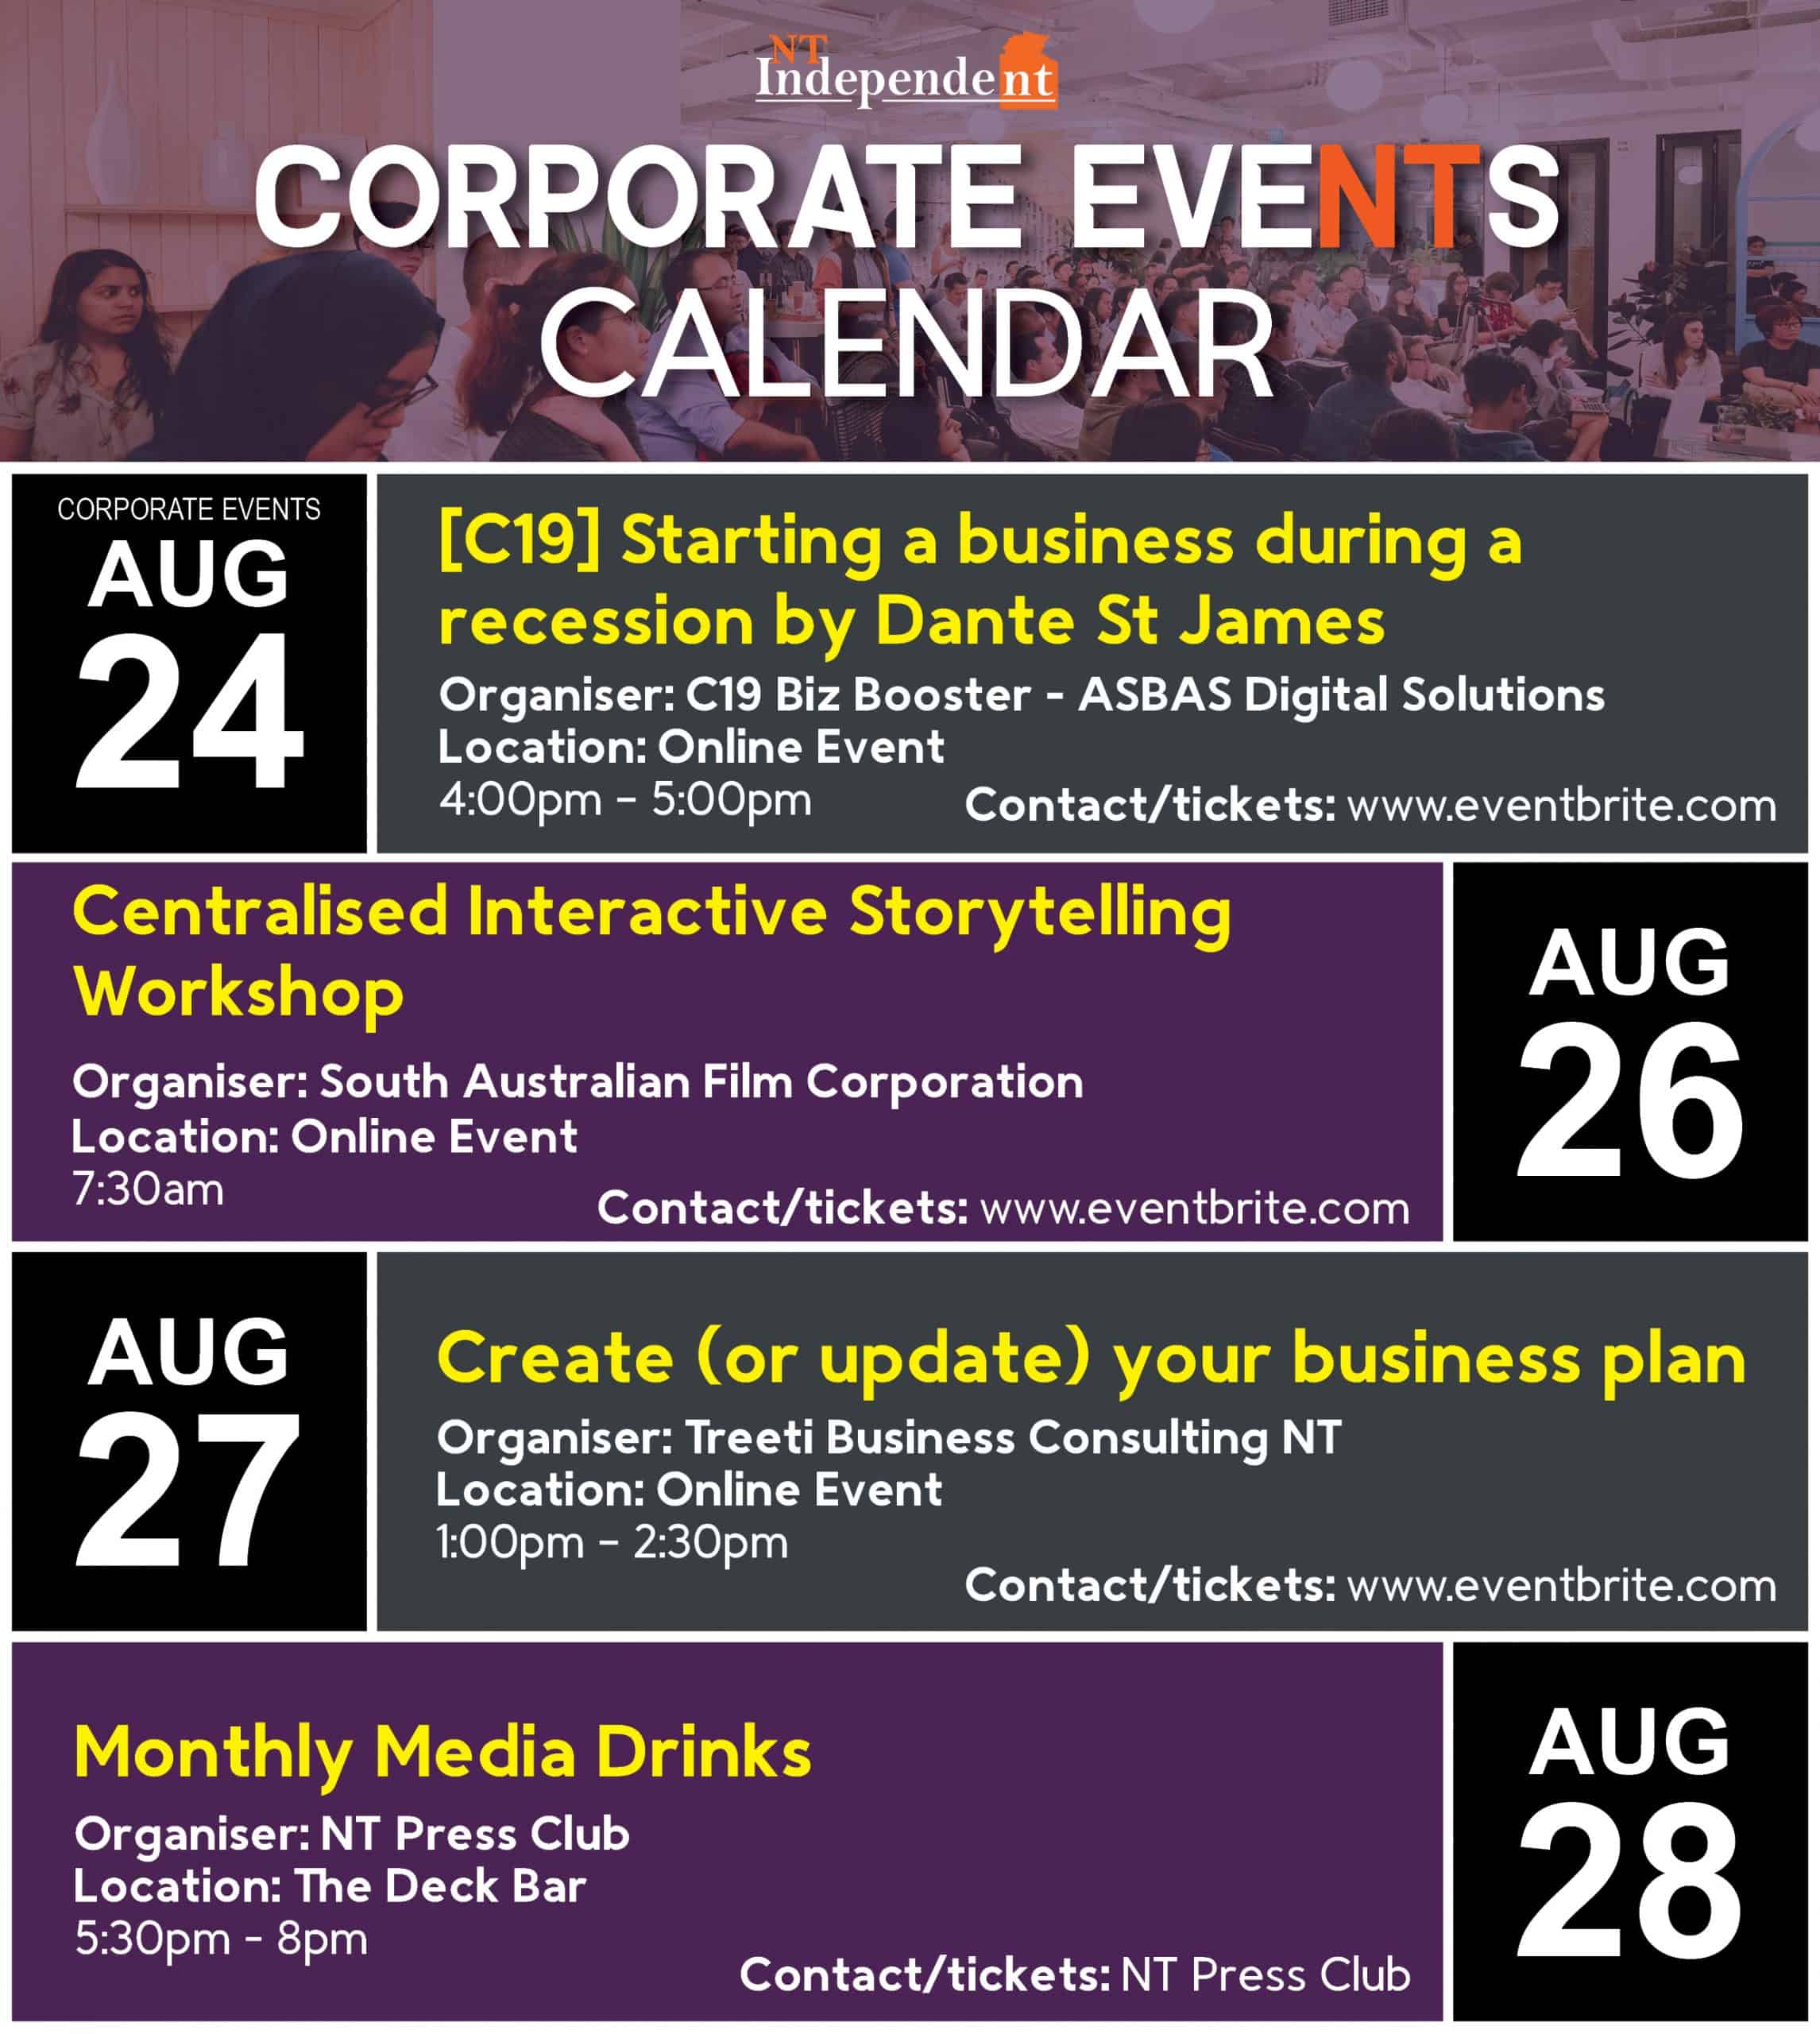 Corporate events calendar - August